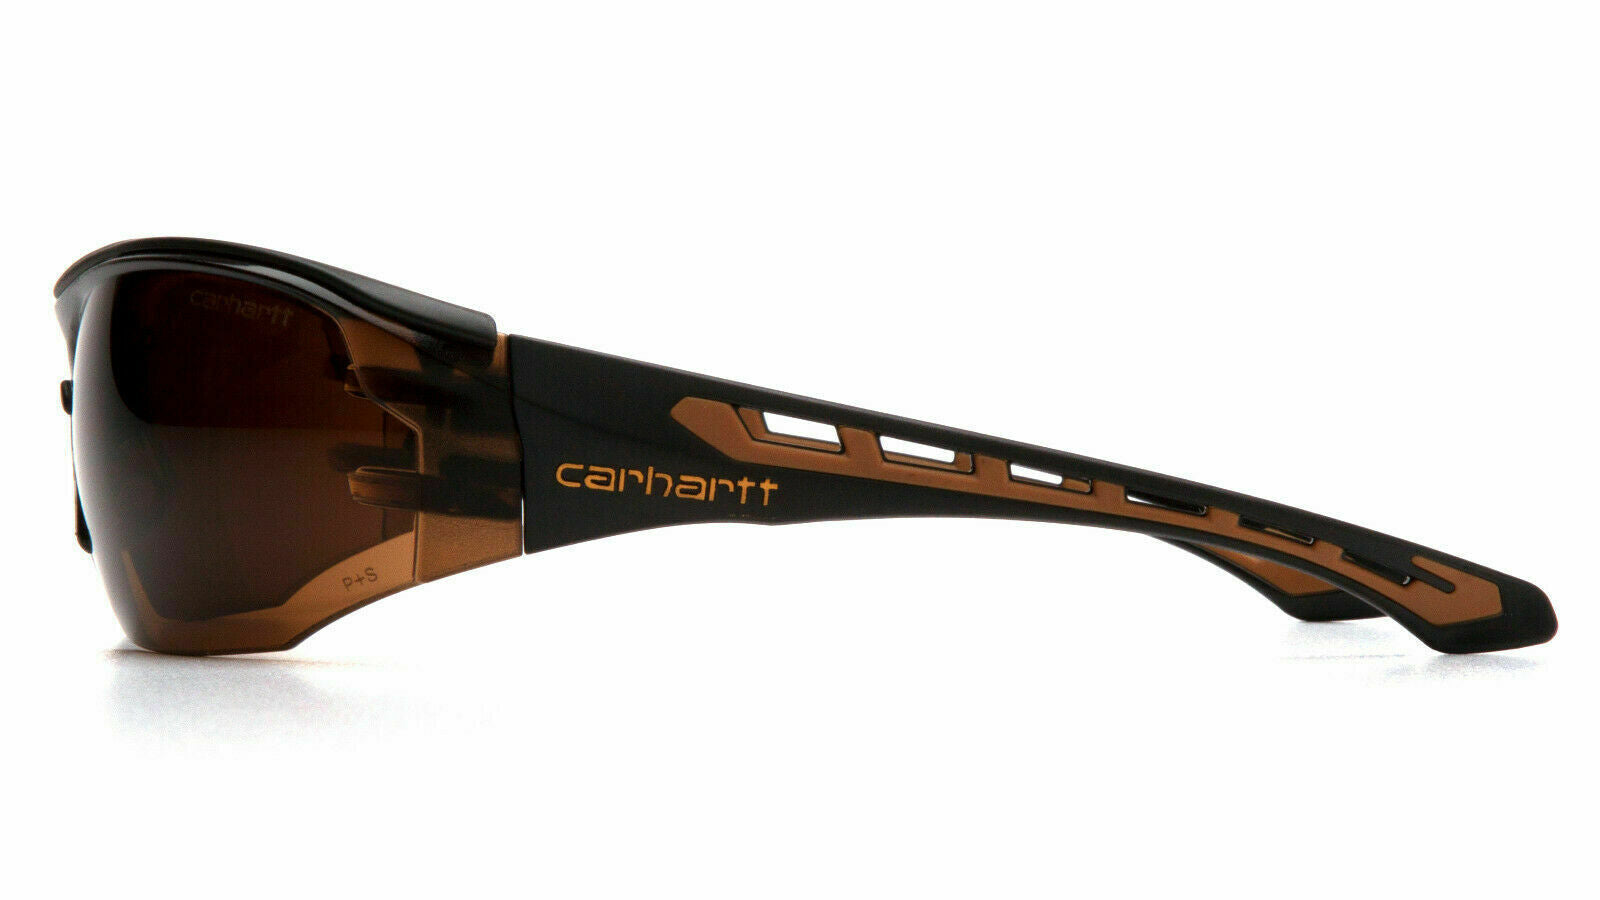 Carhartt Easley Anti-Fog Black Safety Glasses Sunglasses - Lens Options